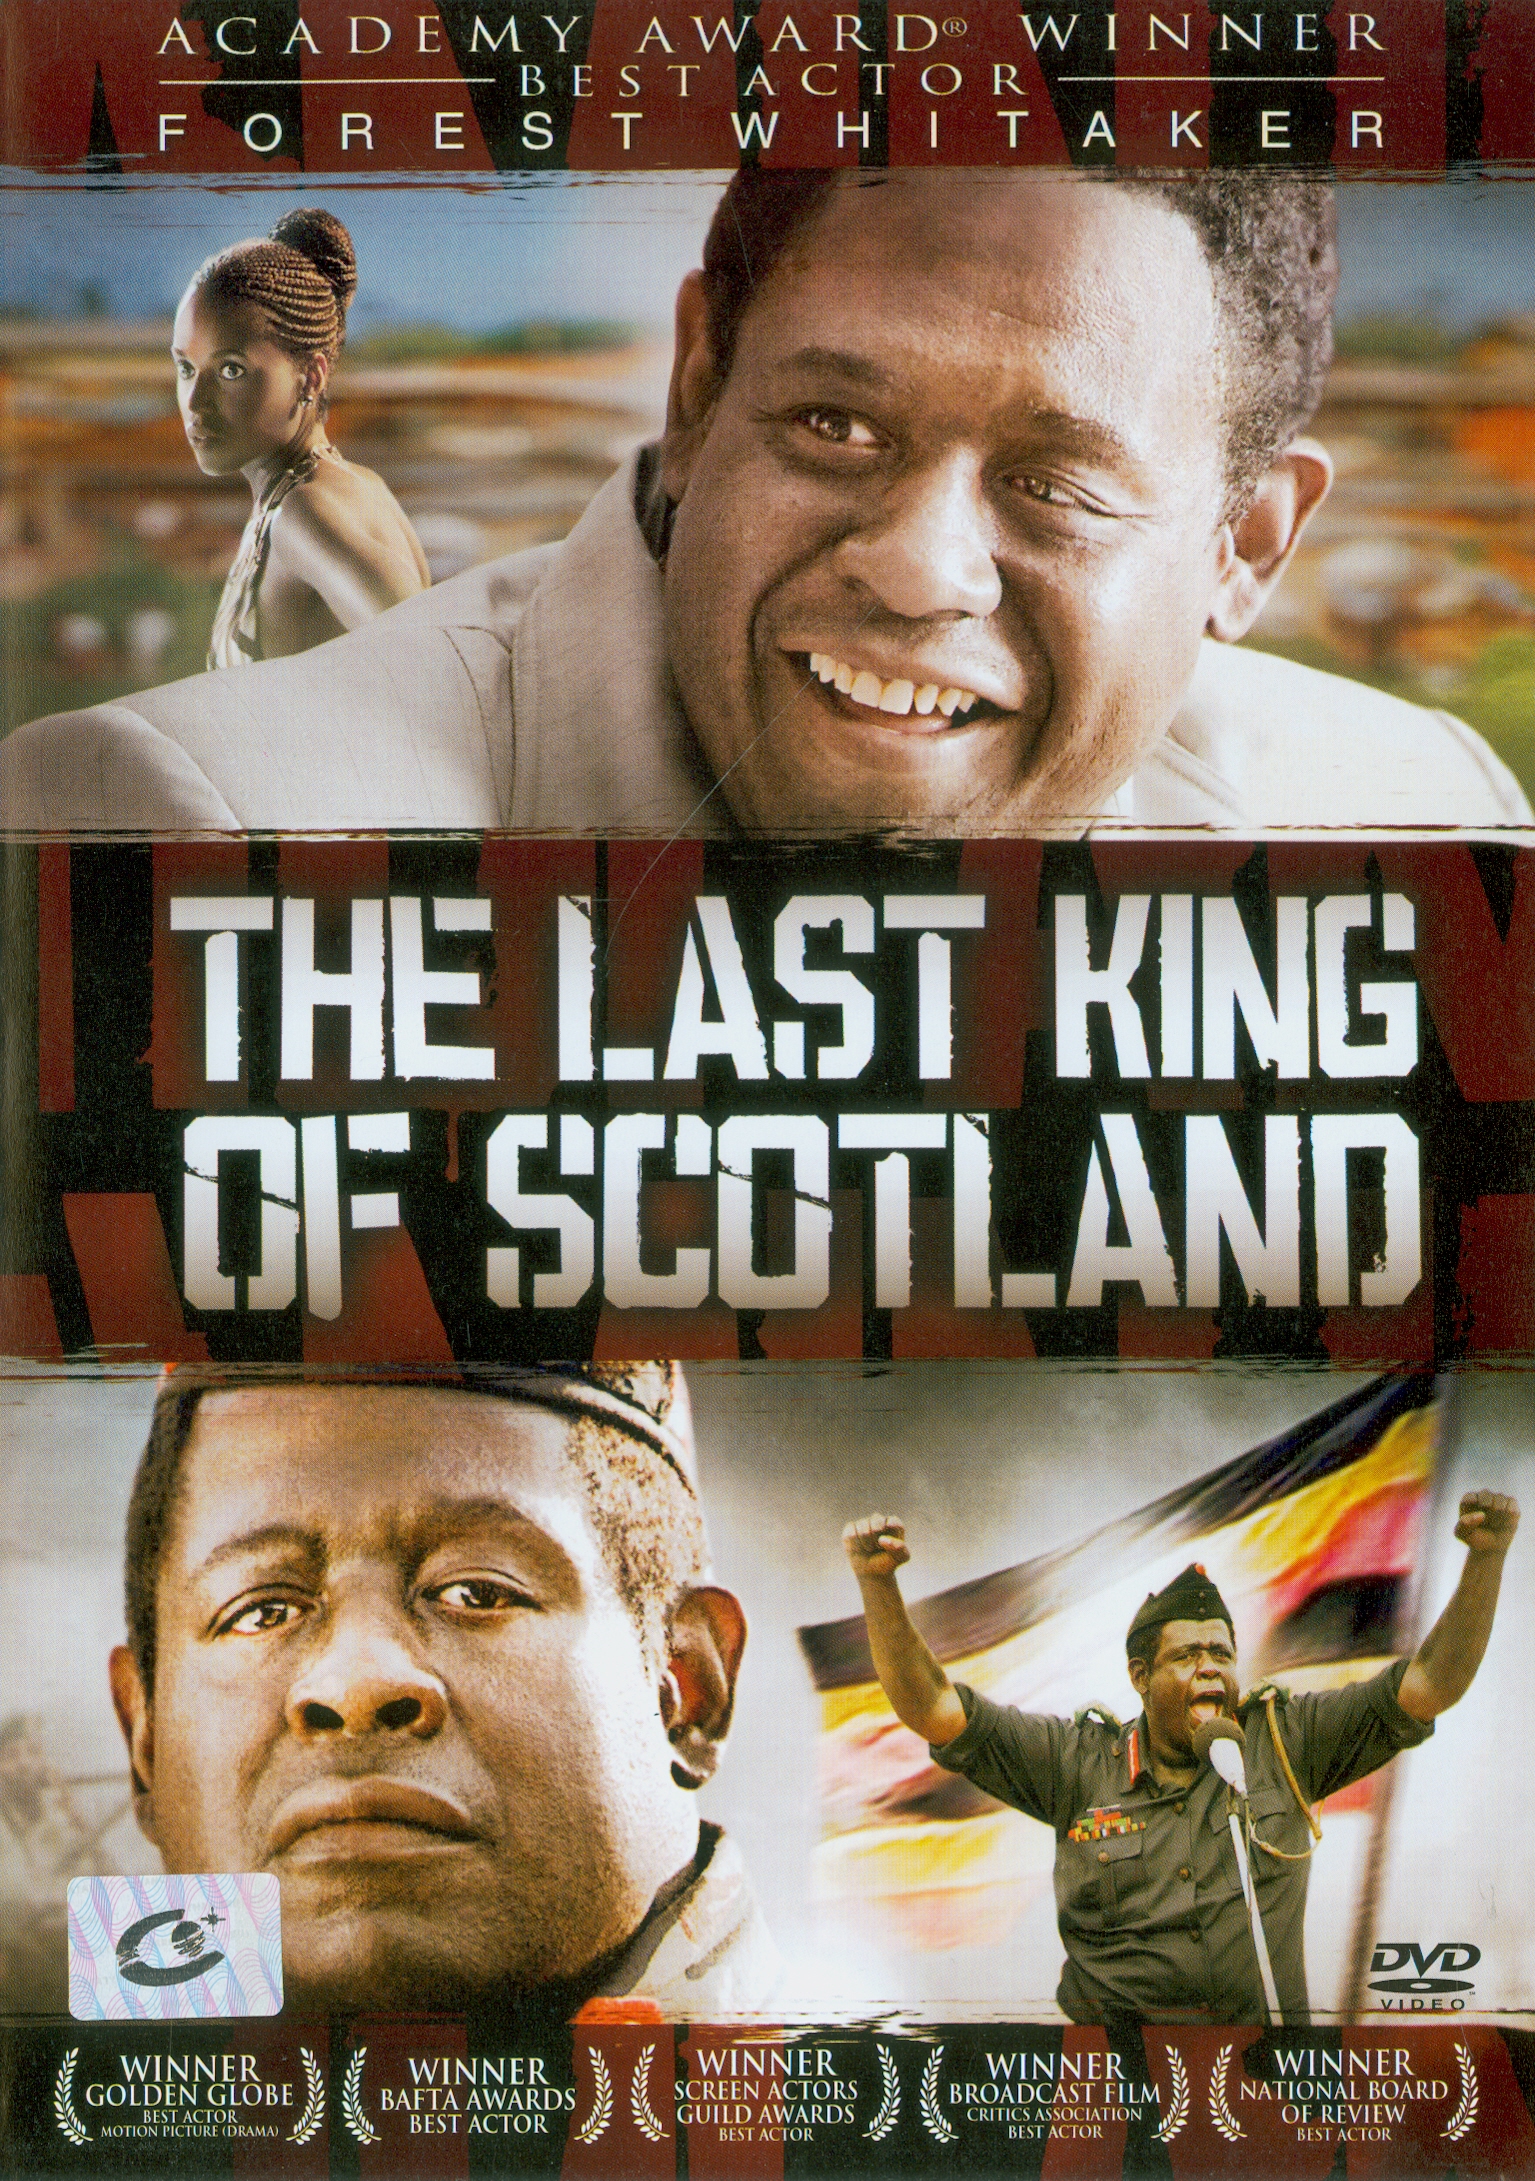  The last king of Scotland